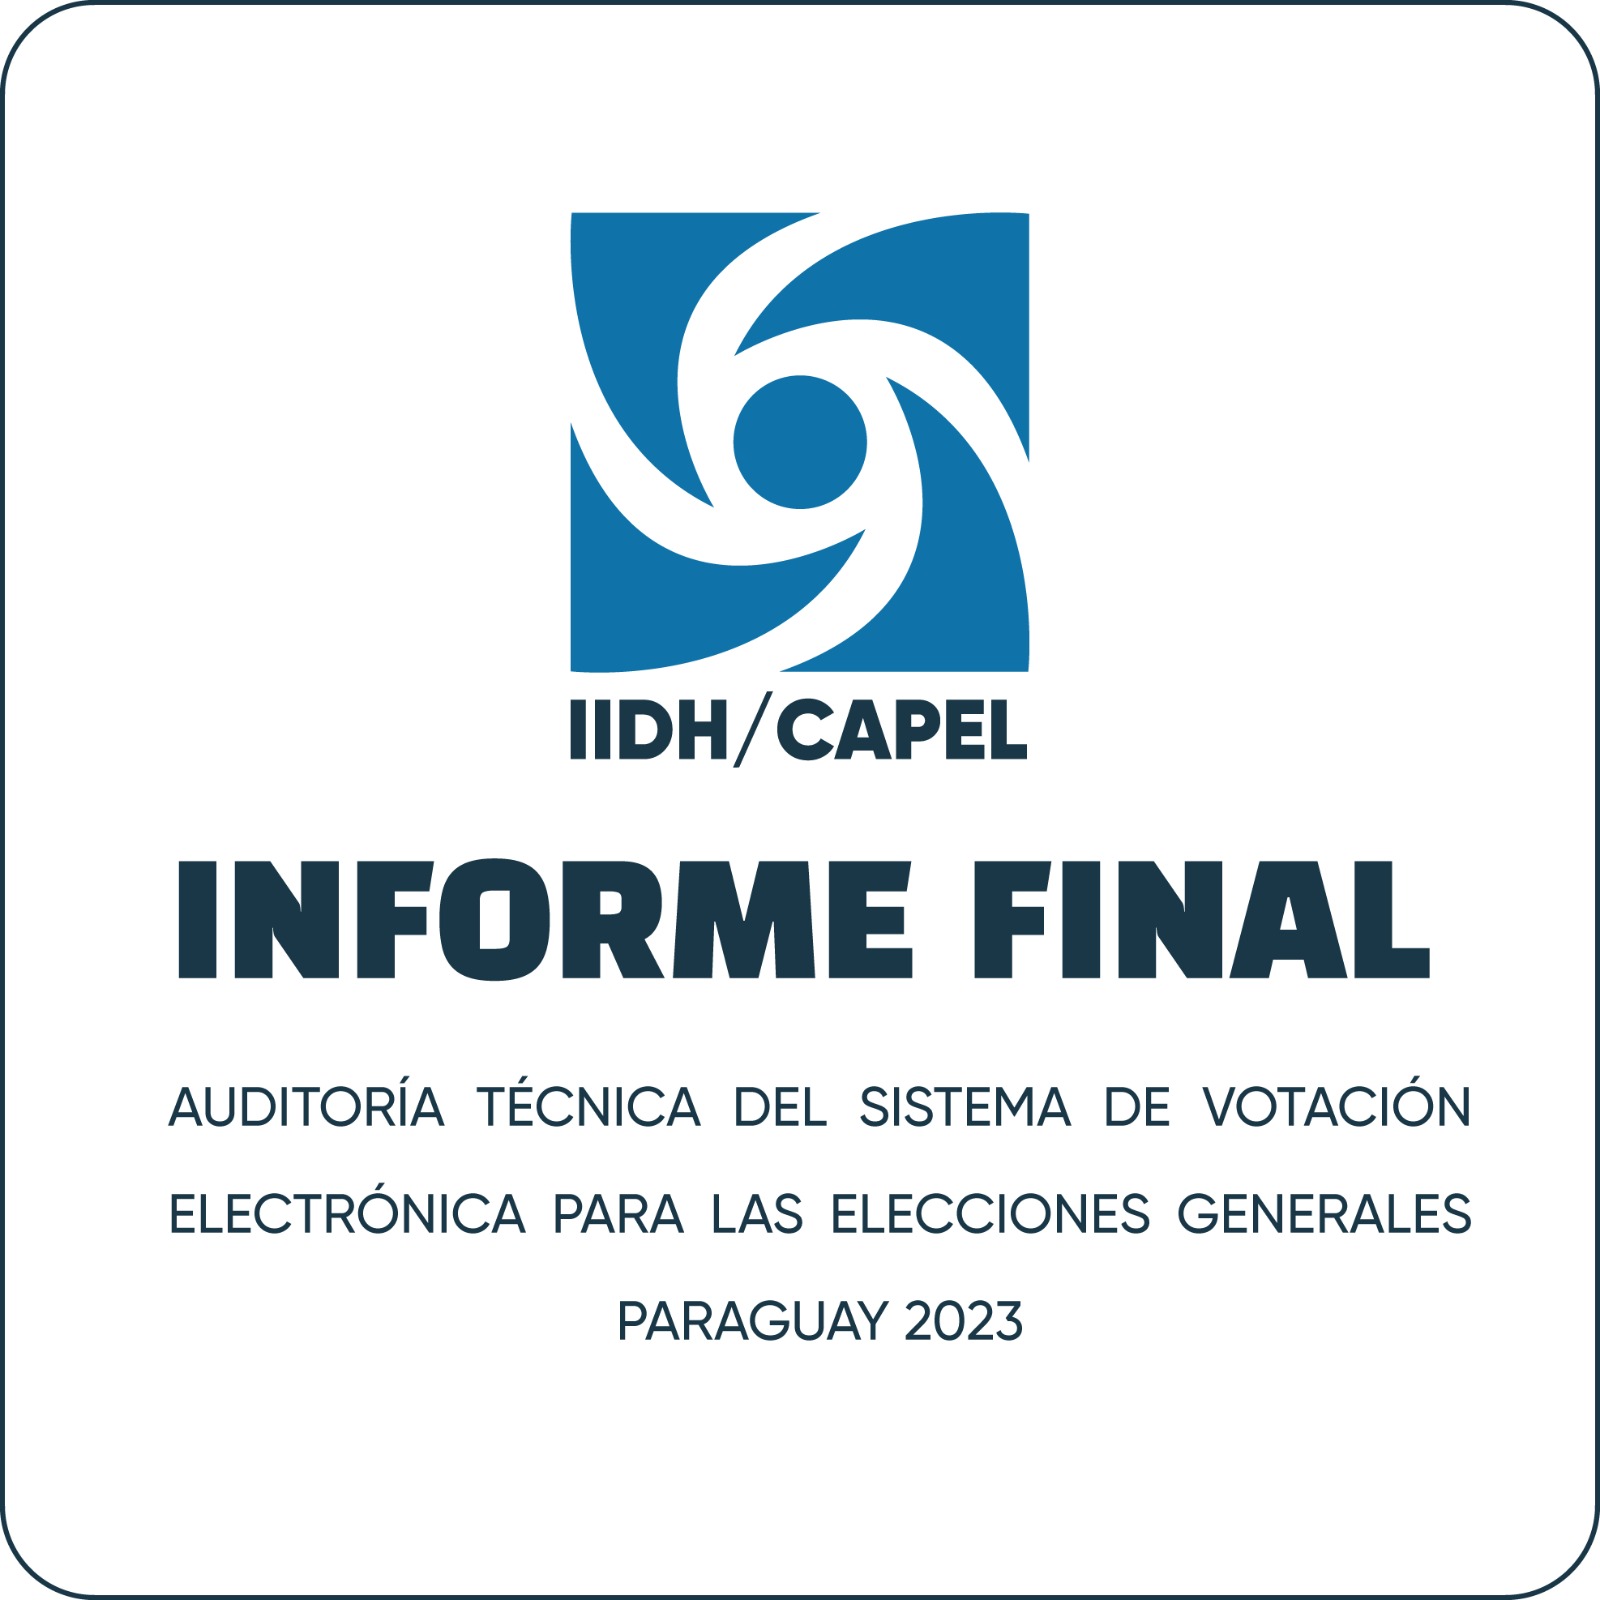 Informe final IIDH-CAPEL